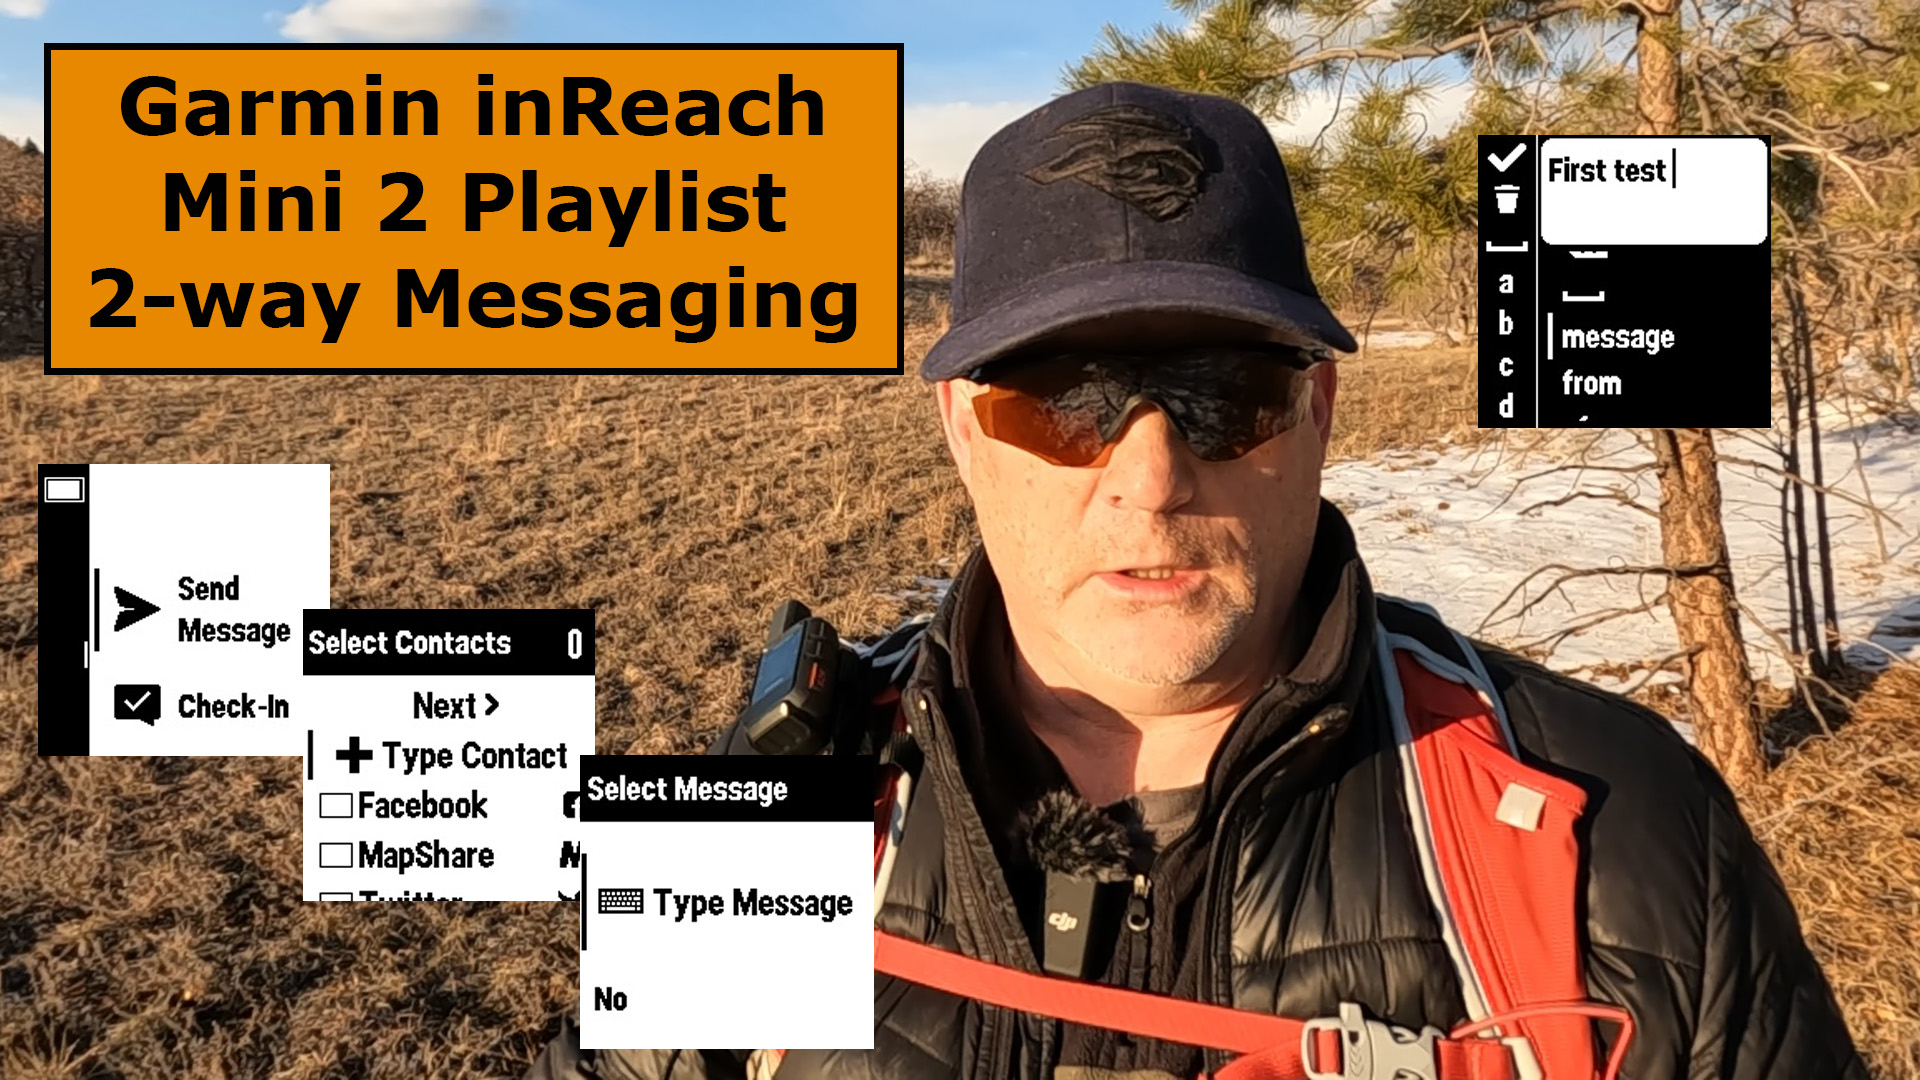 Garmin inReach Mini 2 Playlist - Messaging